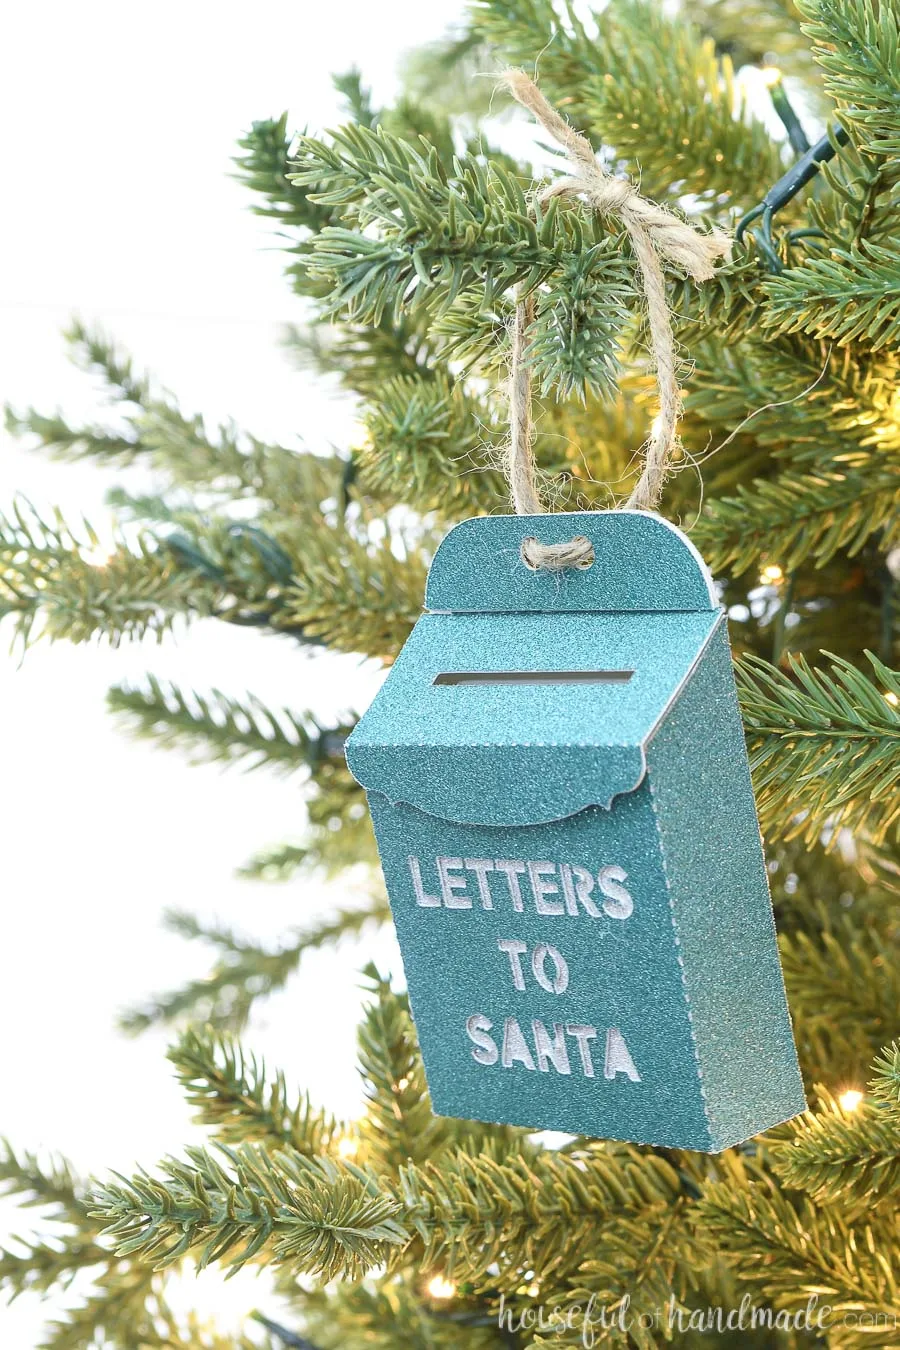 Tis Your Season  Letters for Santa Mailbox Christmas Decoration